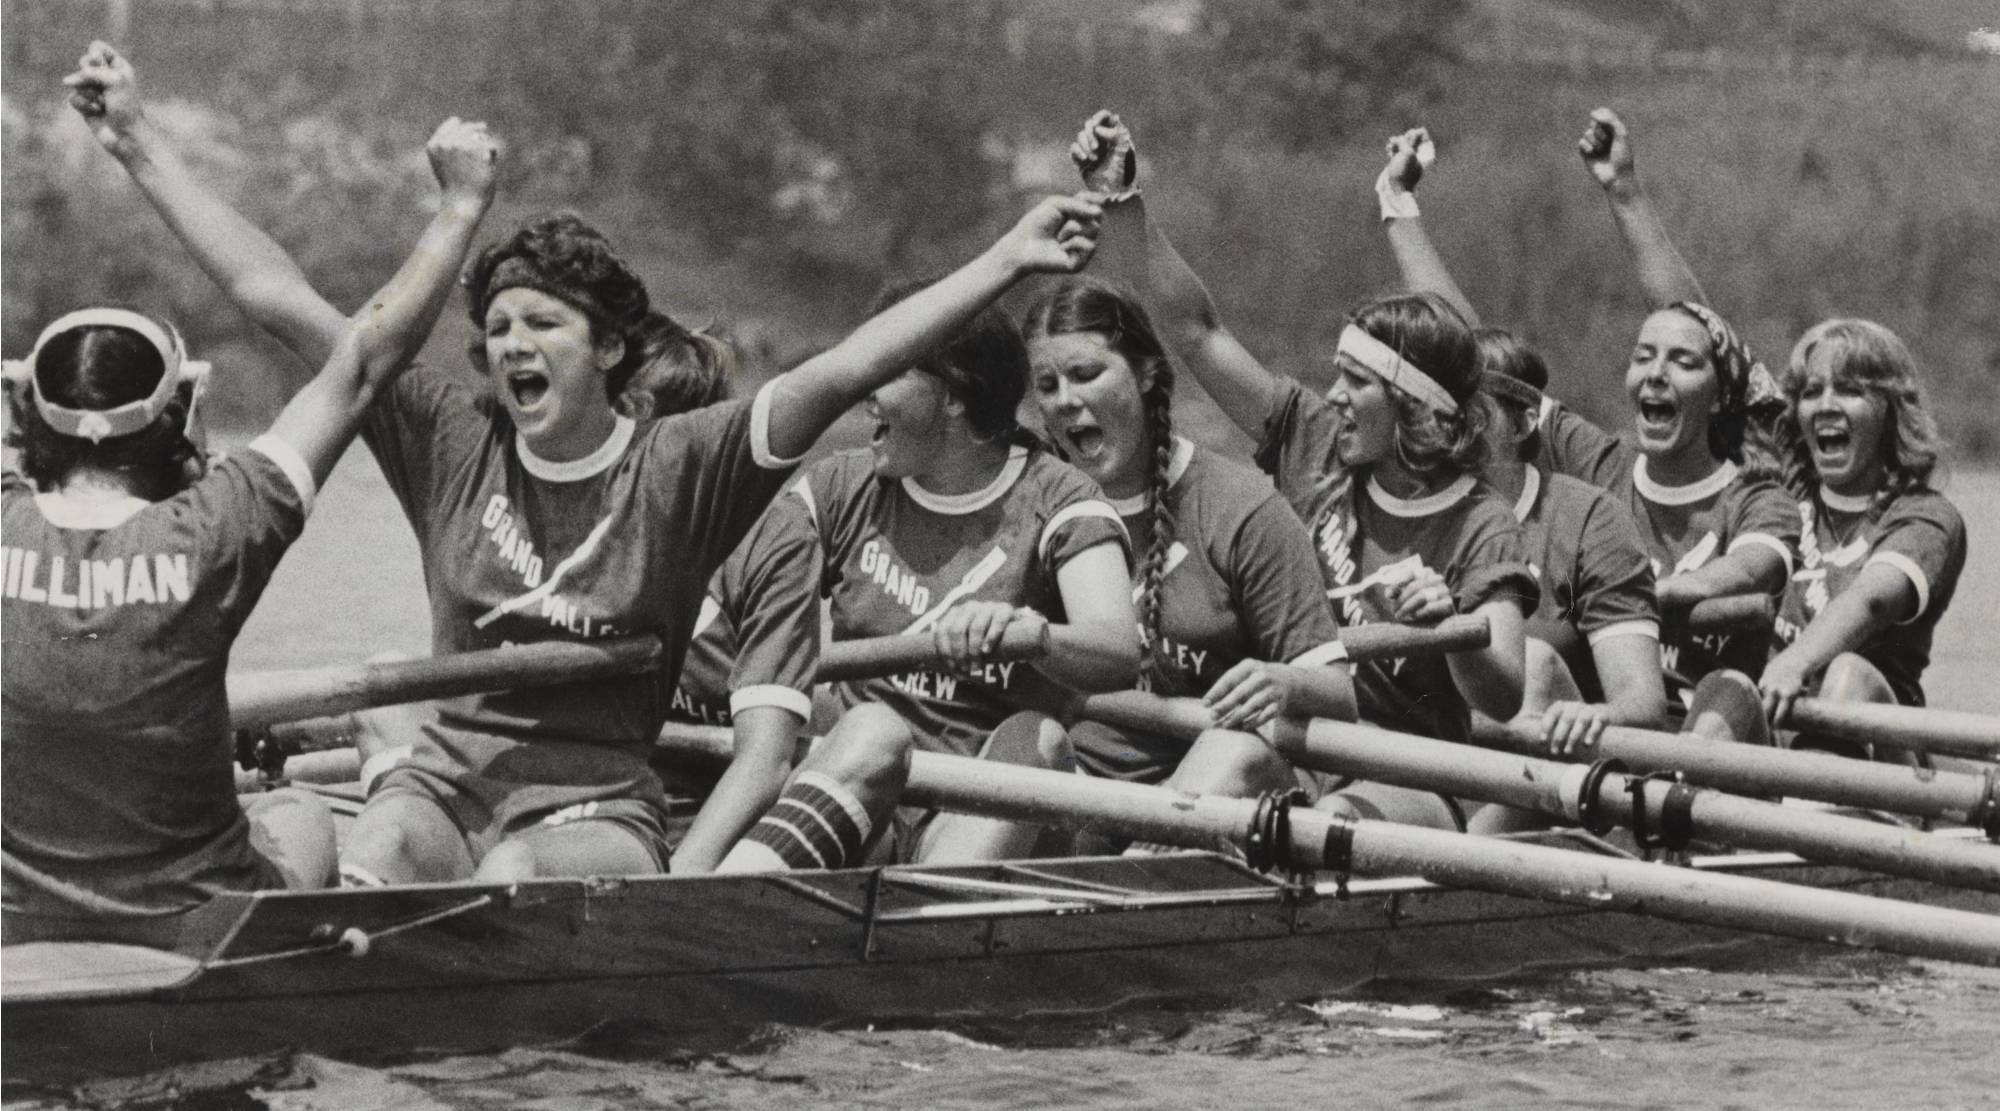 Women's rowing team members celebrate after a race